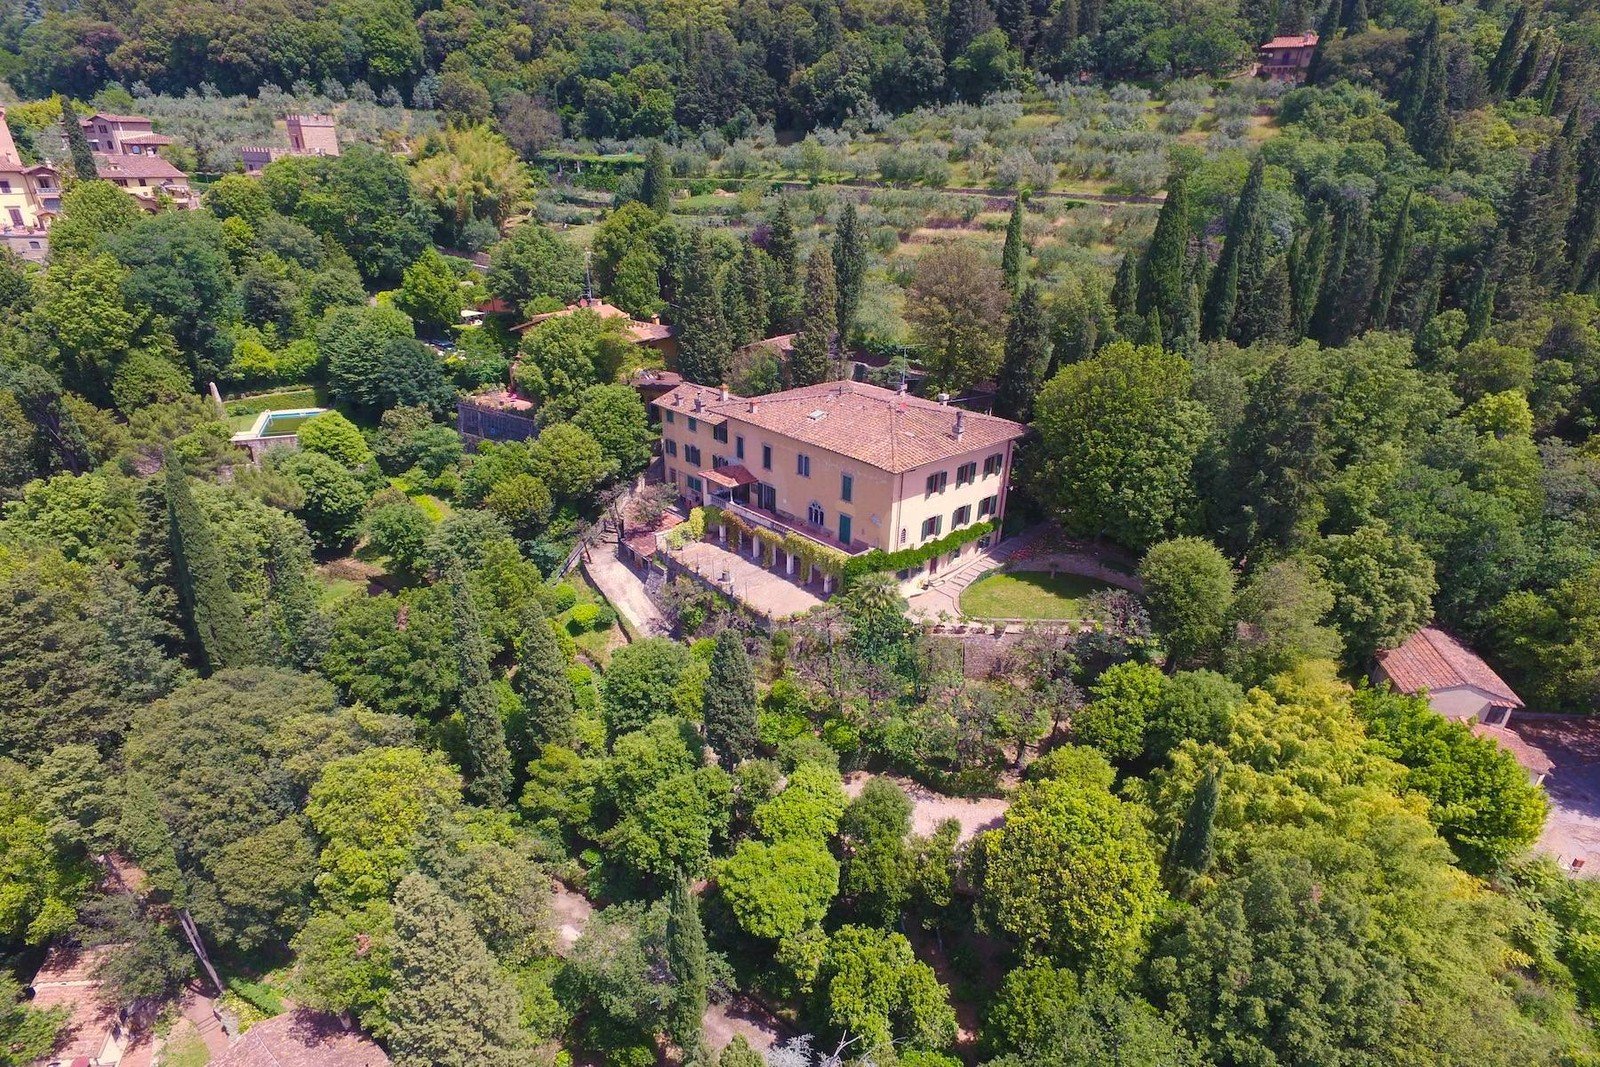 Francis York Italian Villa Set in the Tuscan Hills Overlooking Florence, Italy 00004.jpeg